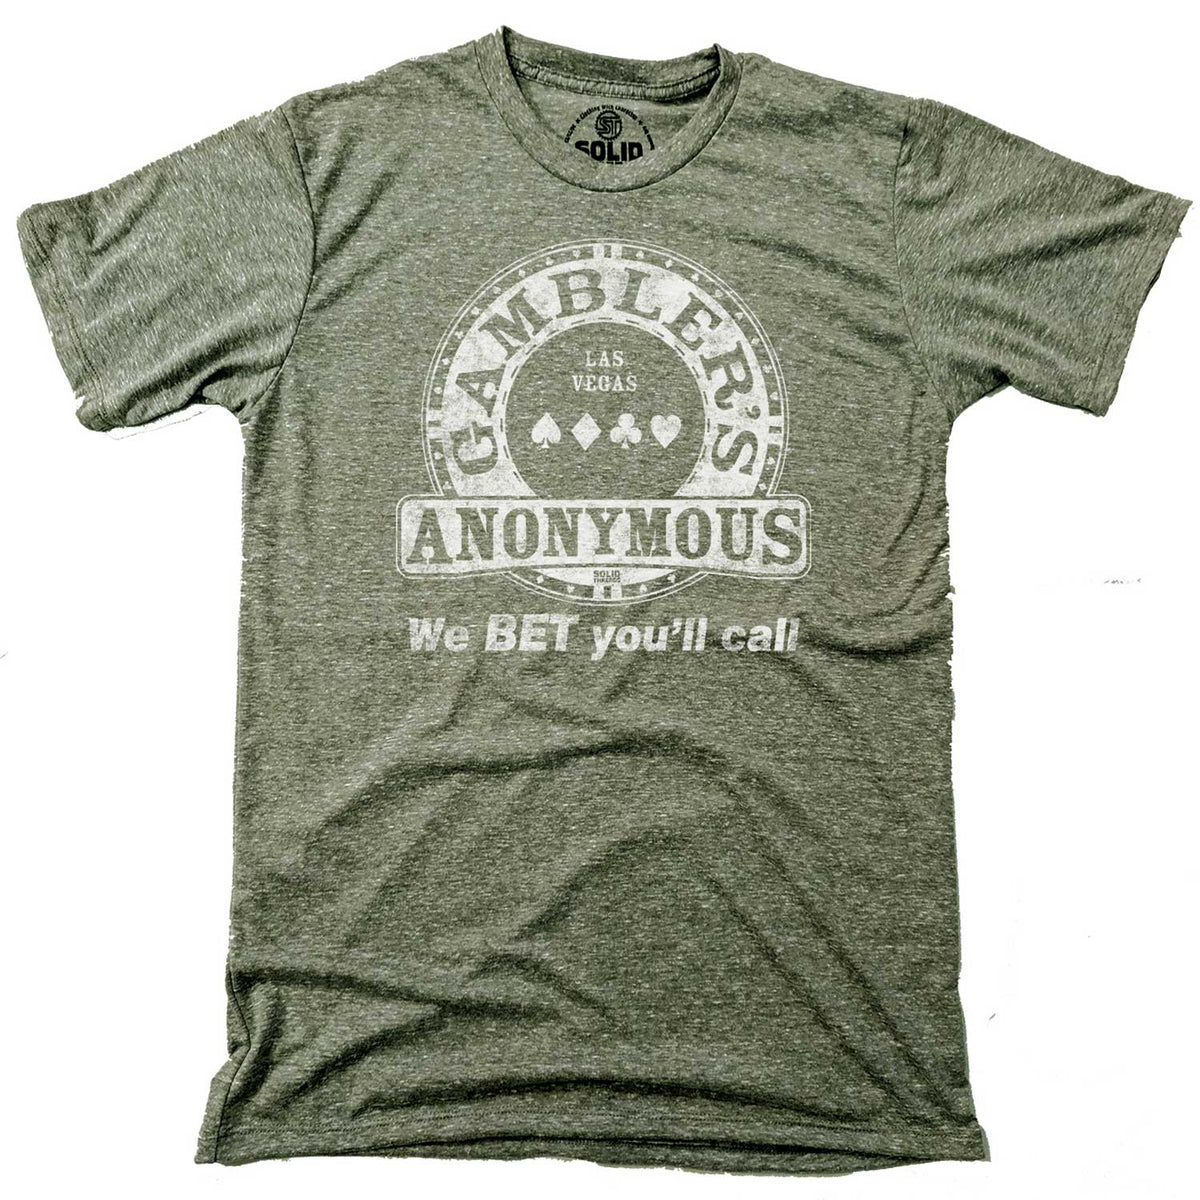 Gambler's Anonymous Vintage Graphic T-Shirt